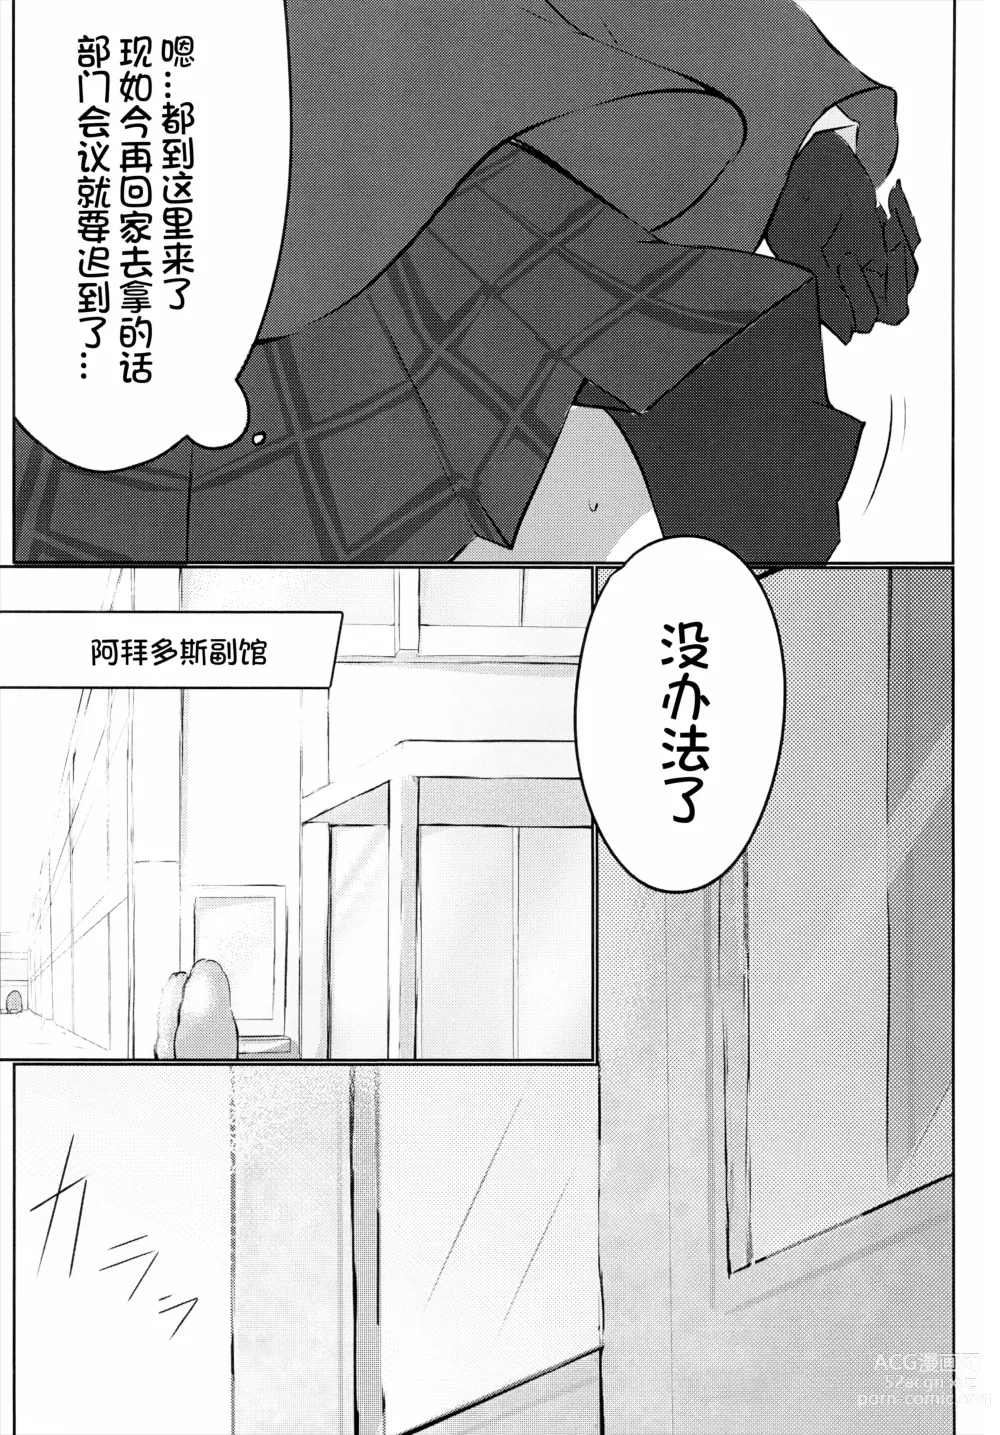 Page 5 of doujinshi Hakusyoku Aisei